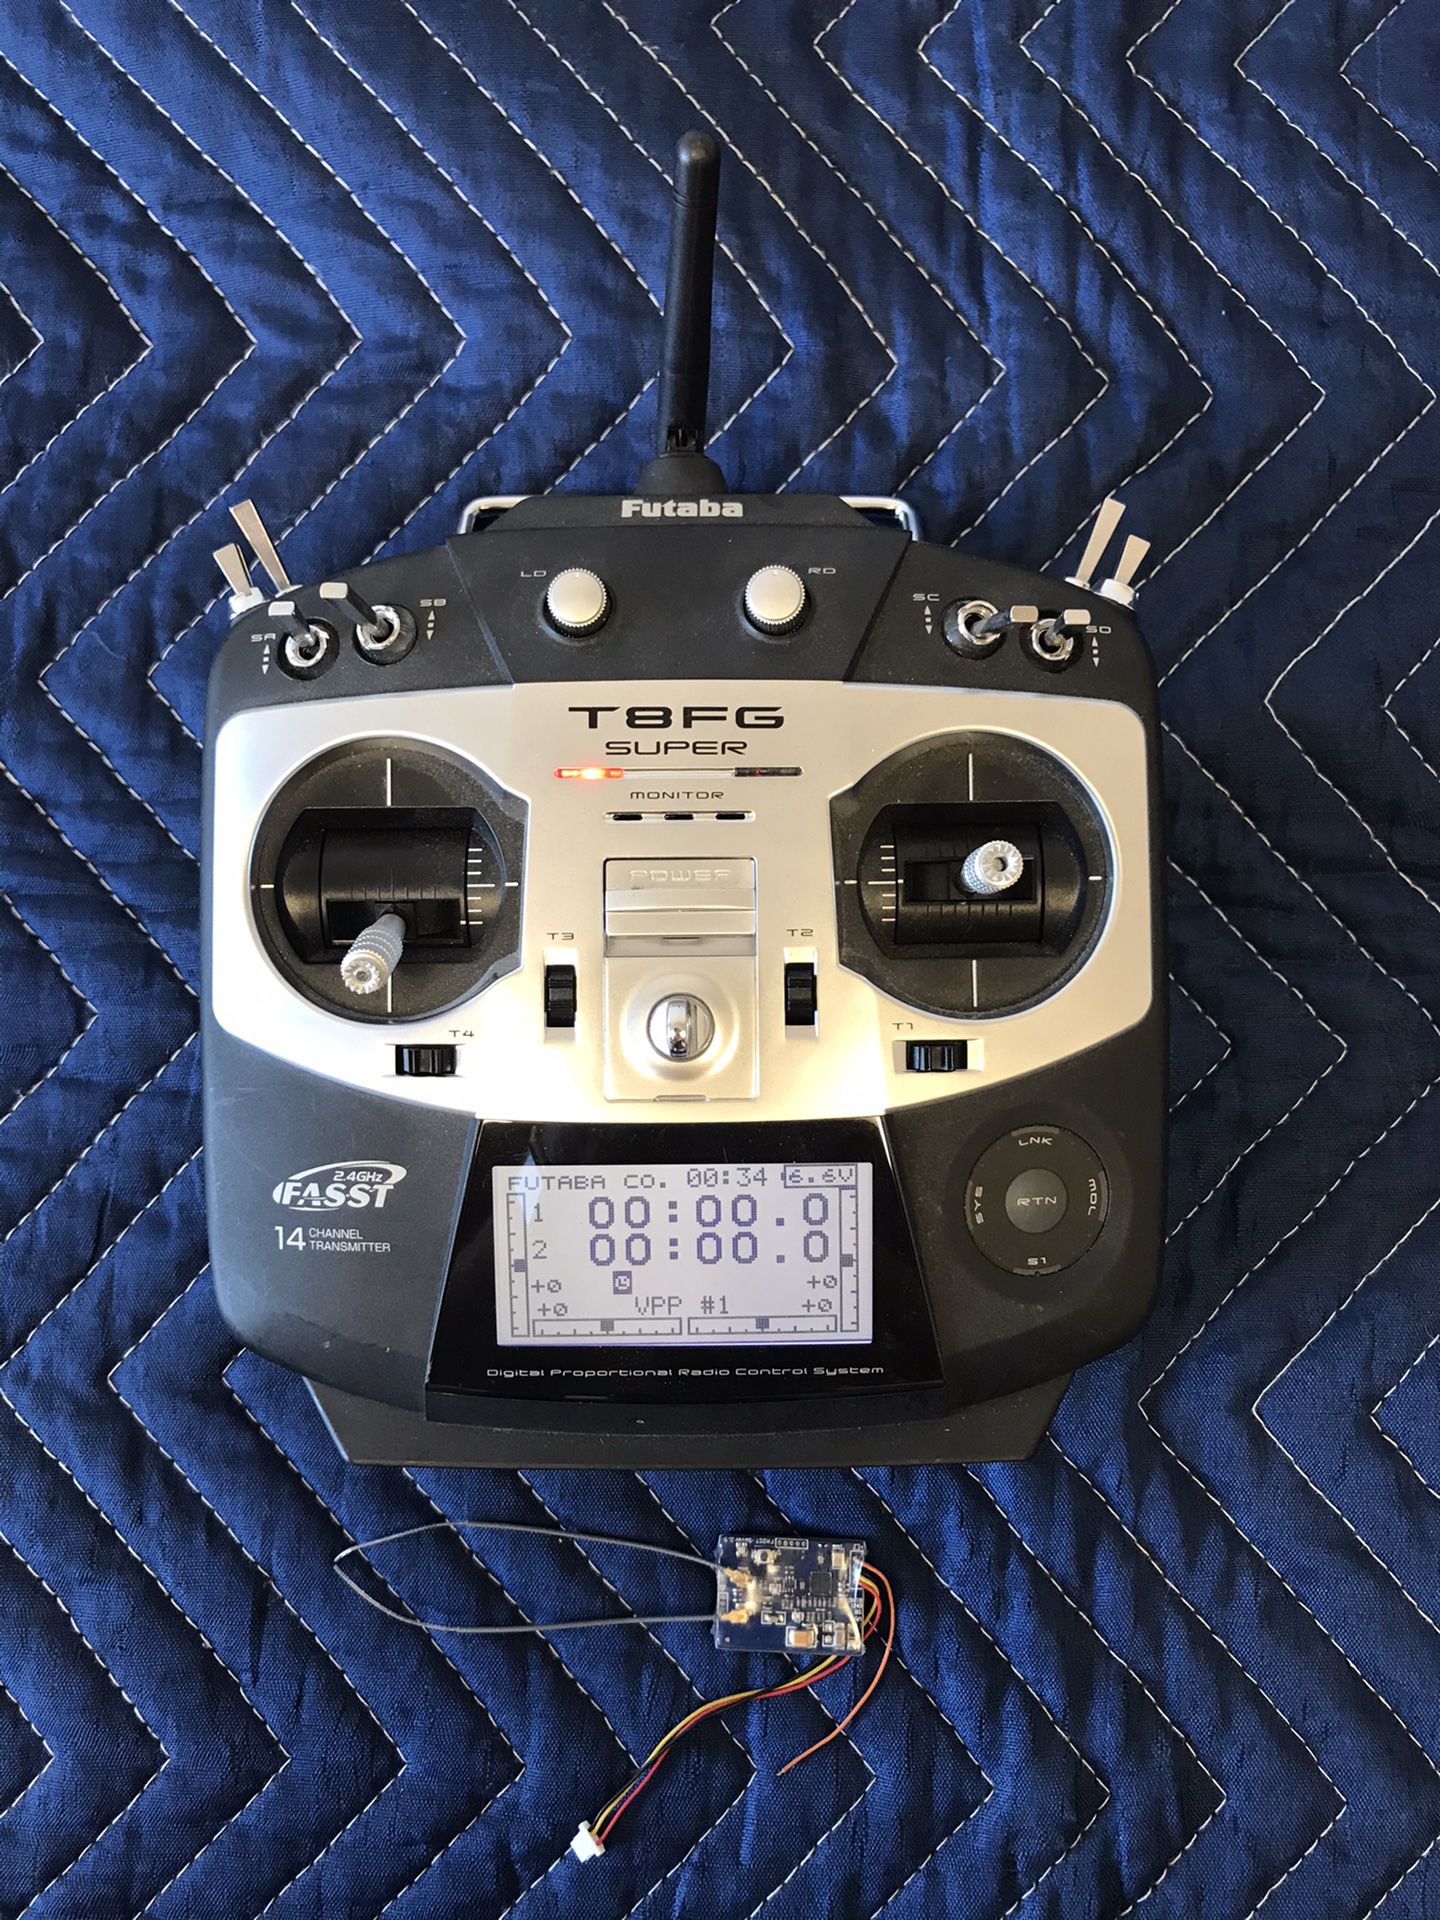 Futaba T8FG SUPER 2.4GHz 14 Channel Transmitter & Receiver Tx Rx Drone Remote